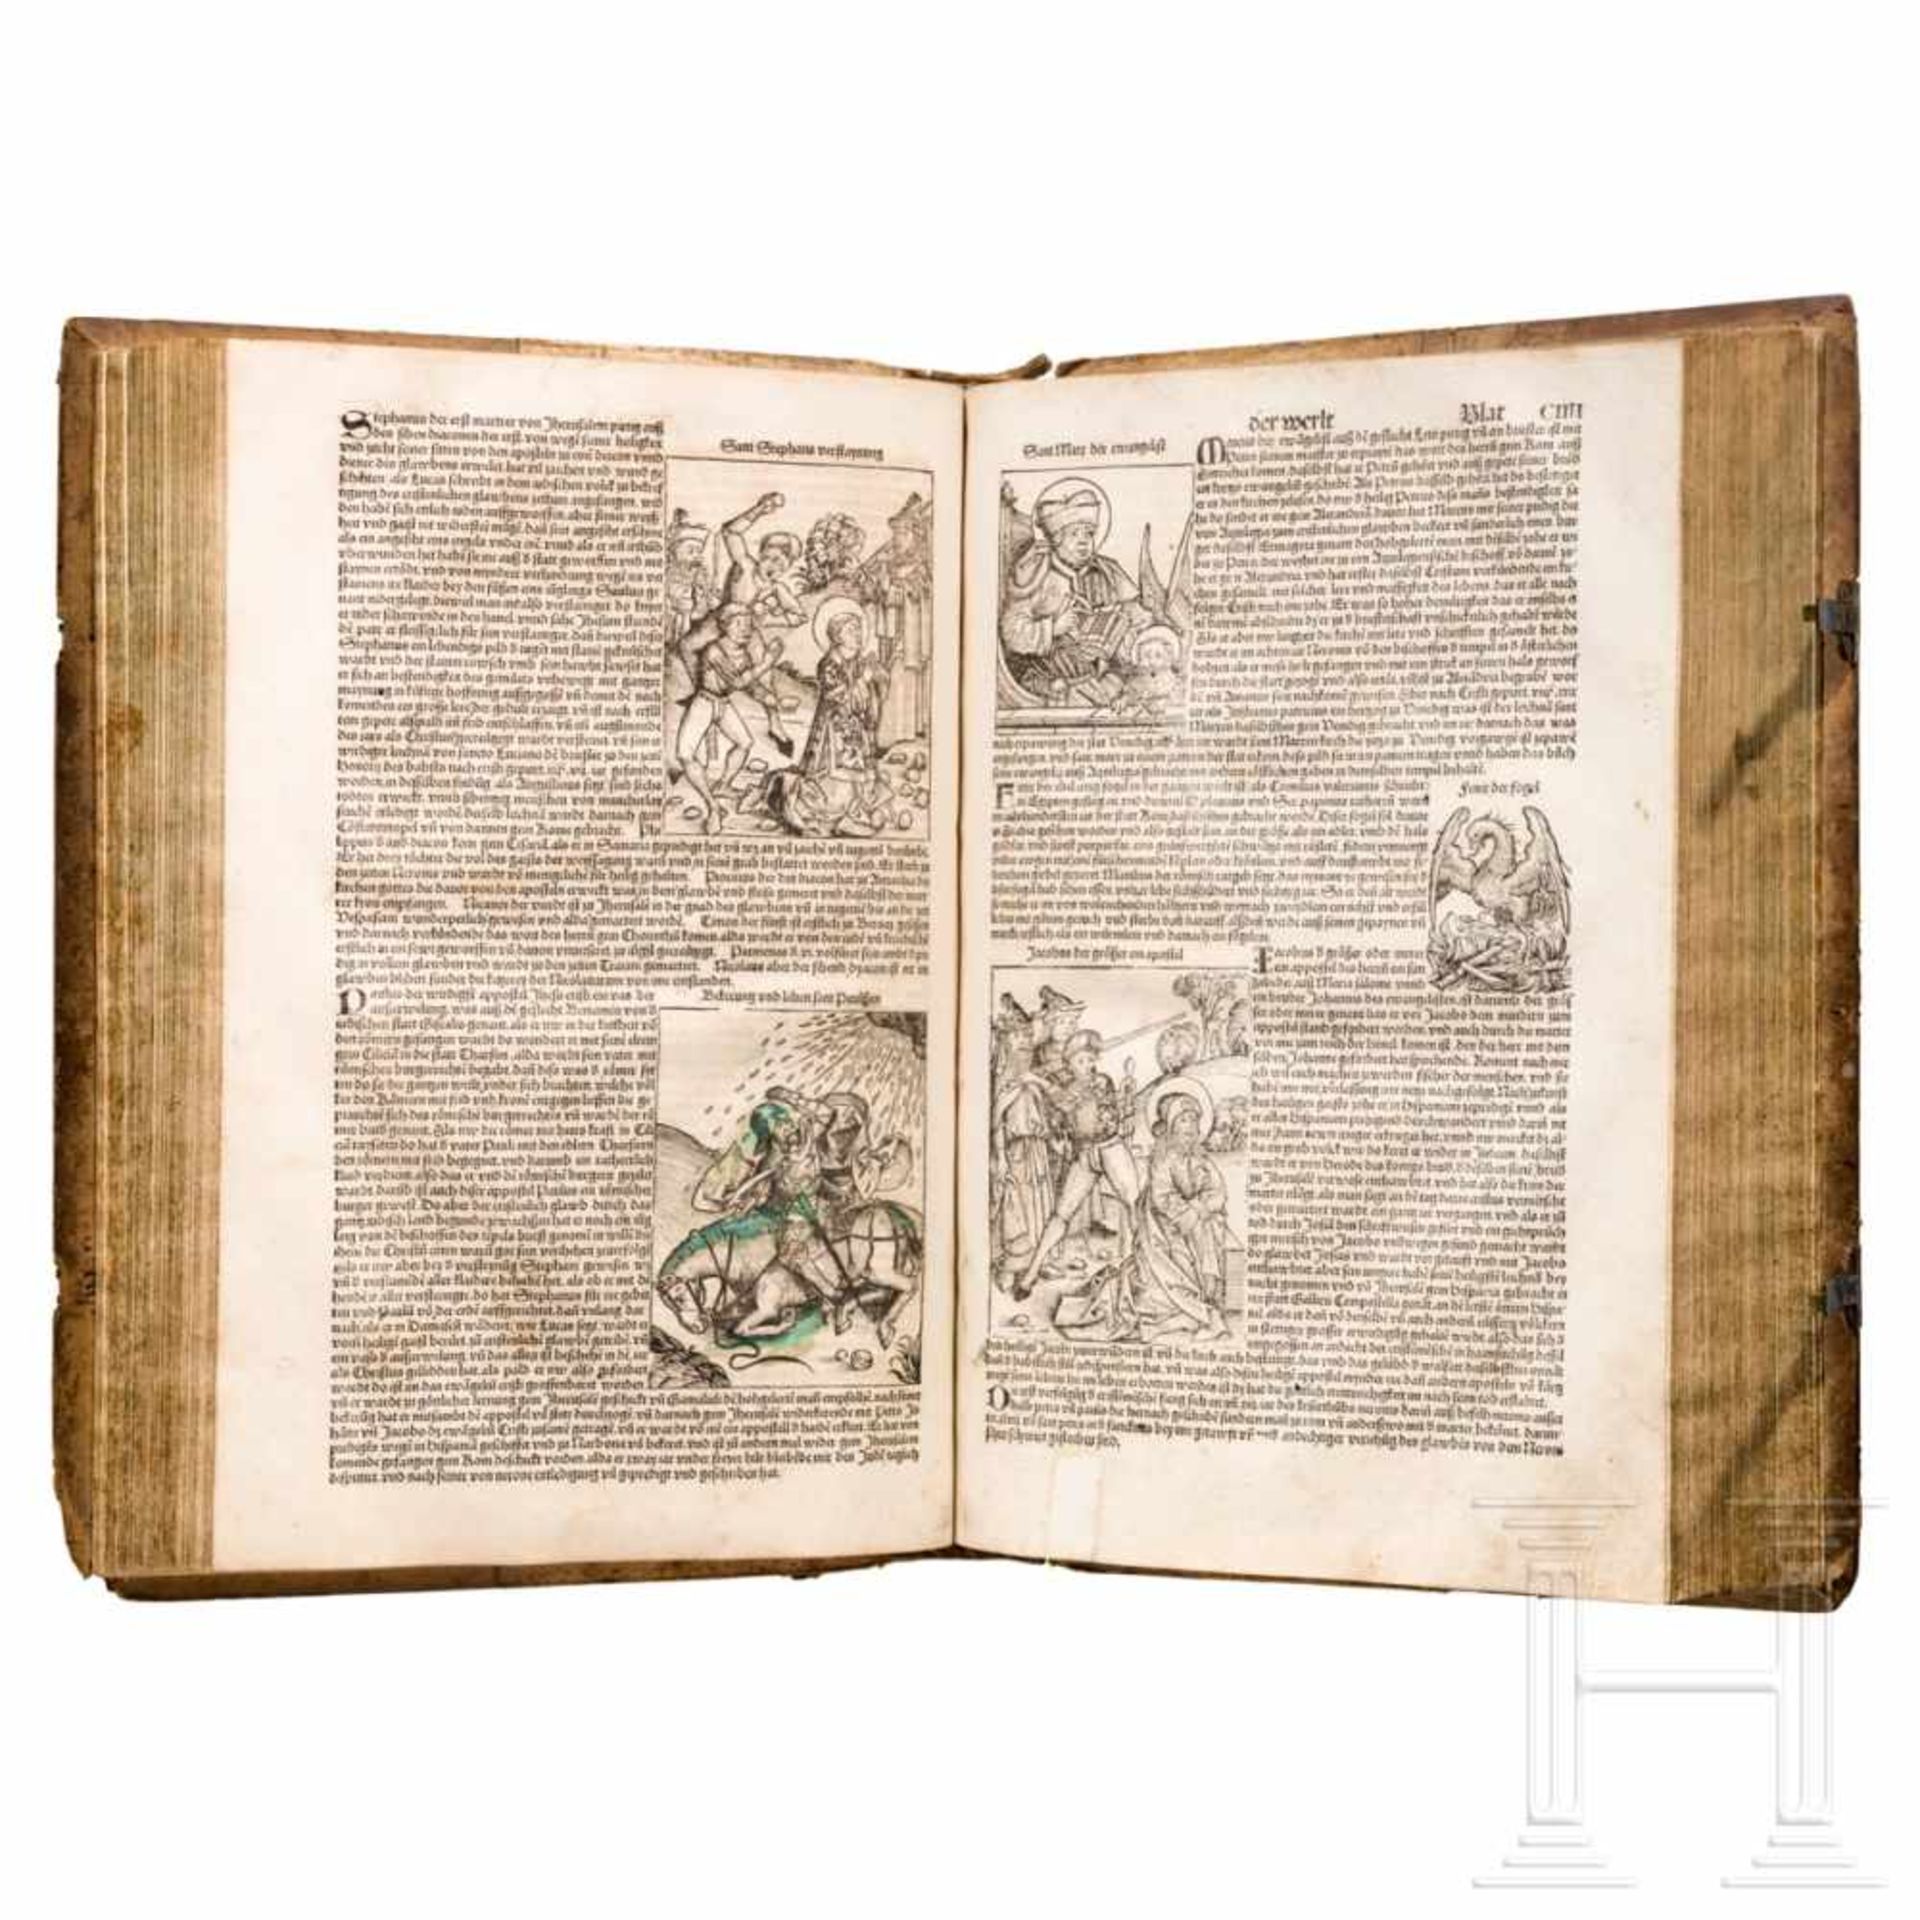 Hartmann Schedel, Das Buch der Chroniken, Nürnberg, A. Koberger, 1493 - Bild 27 aus 51